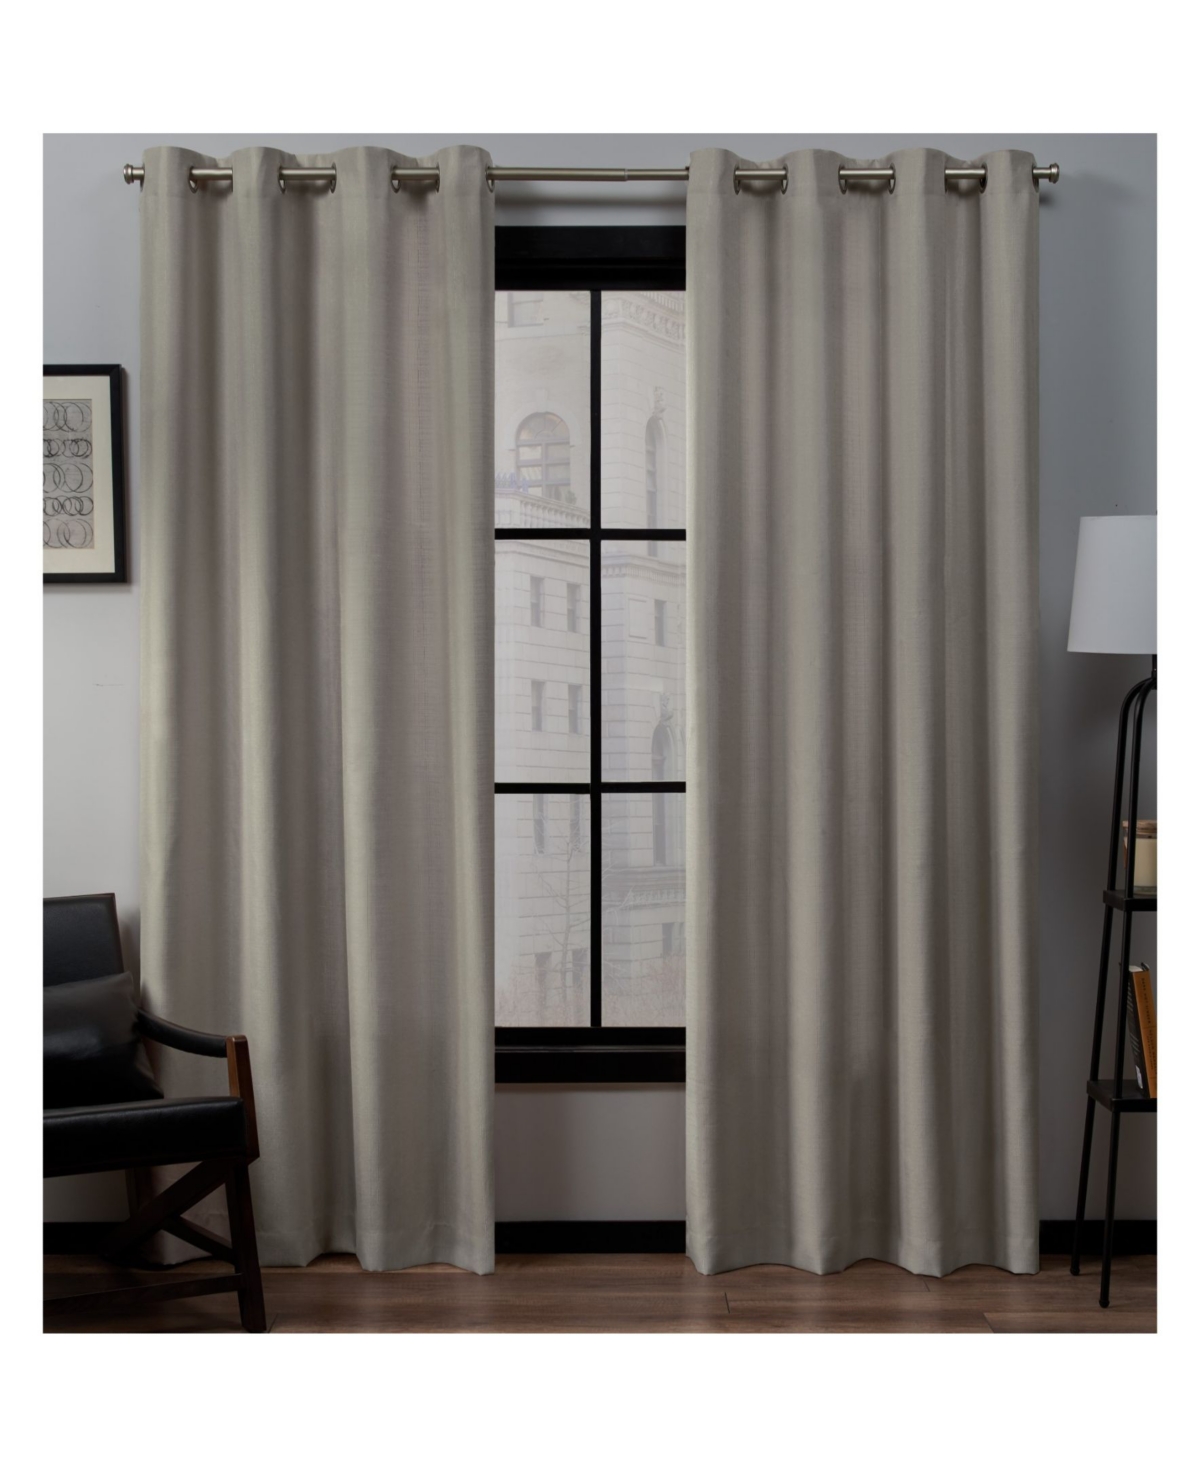 Loha Linen Grommet Top Window Curtain Panel Pair, 54" x 108" - Natural